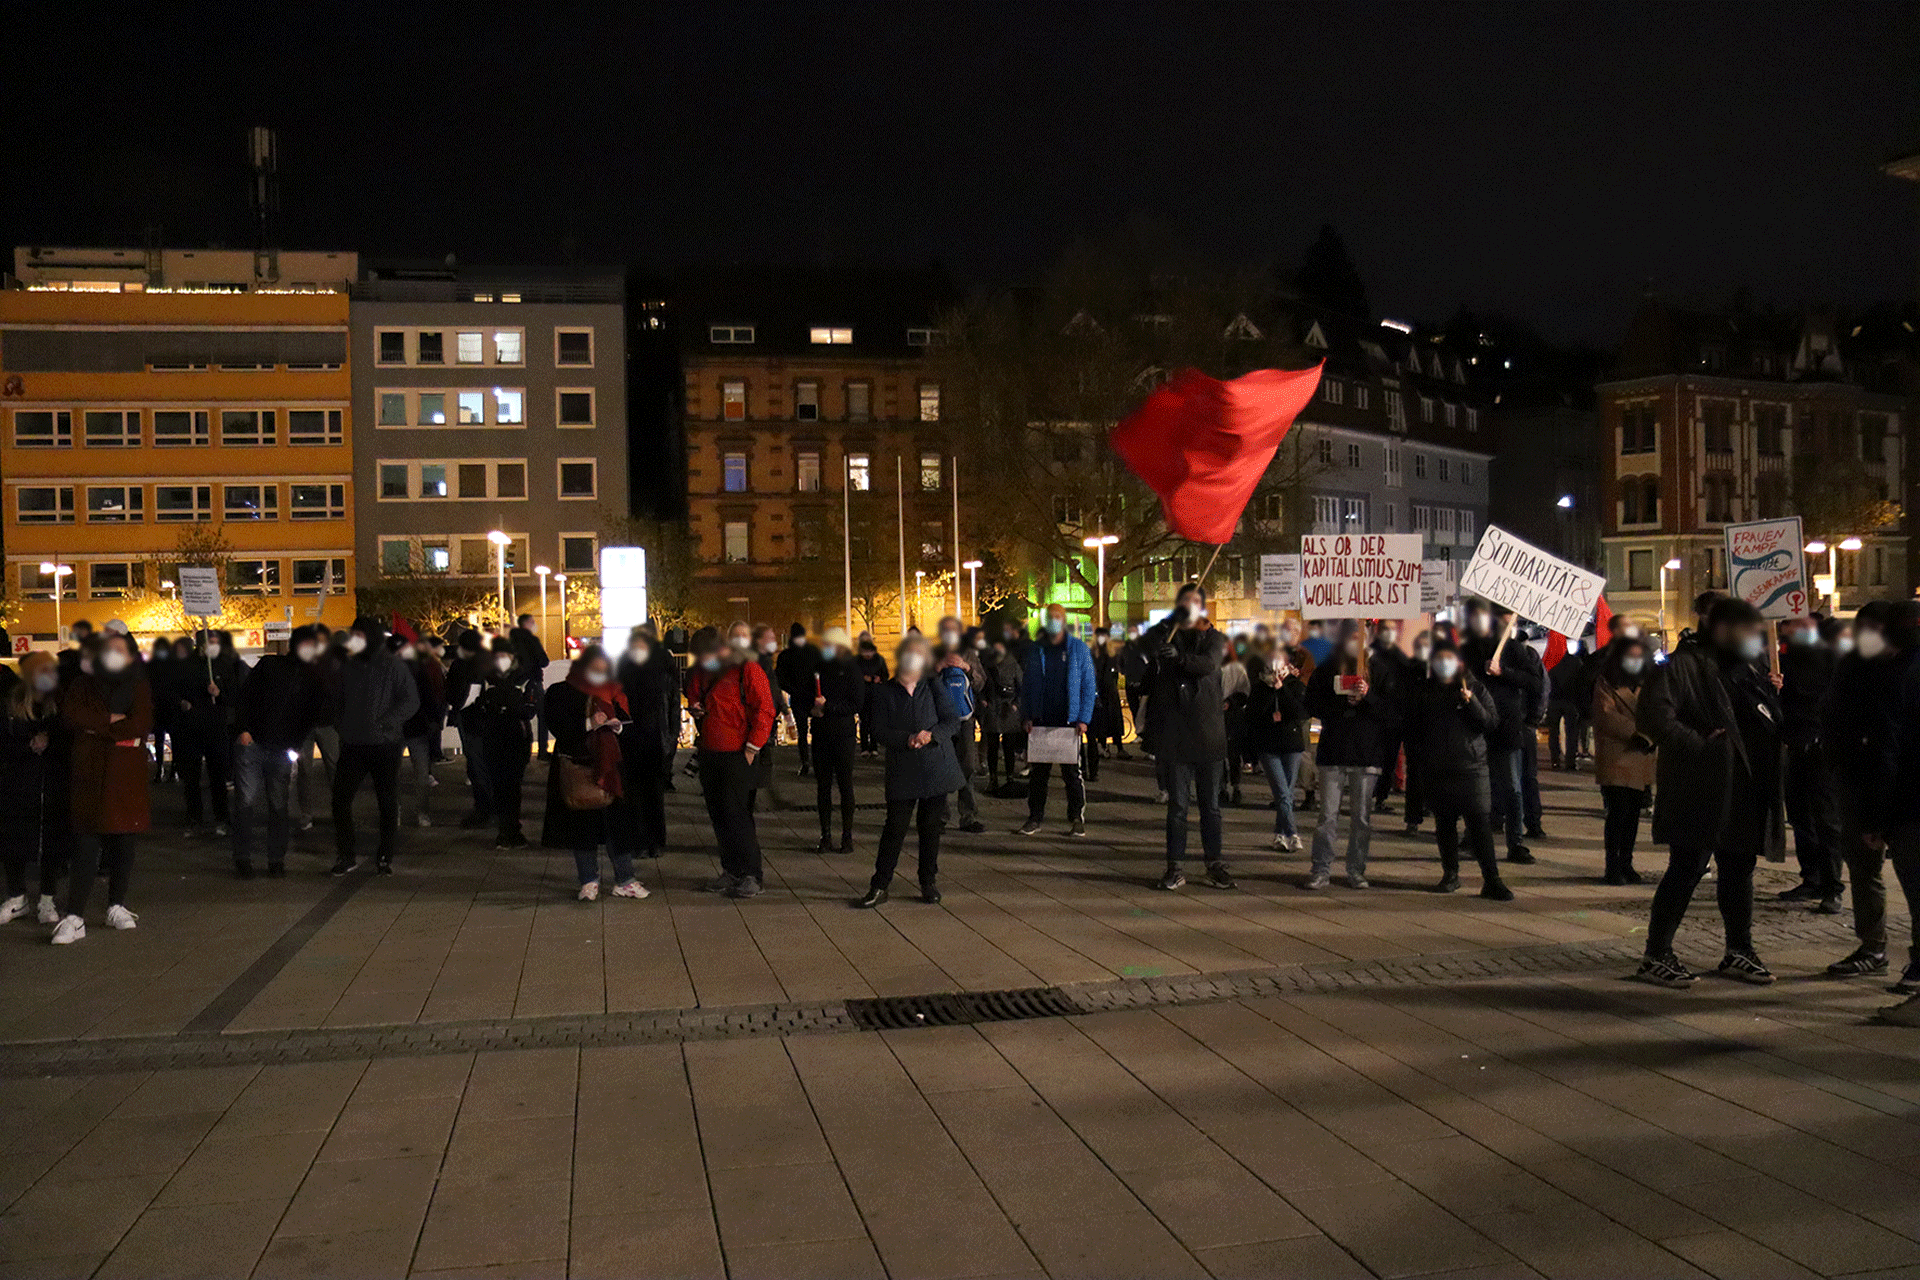 Kundgebung auf dem Marienplatz in Stuttgart gegen Corona-Ausgangssperren in Stuttgart und gegen Querdenken